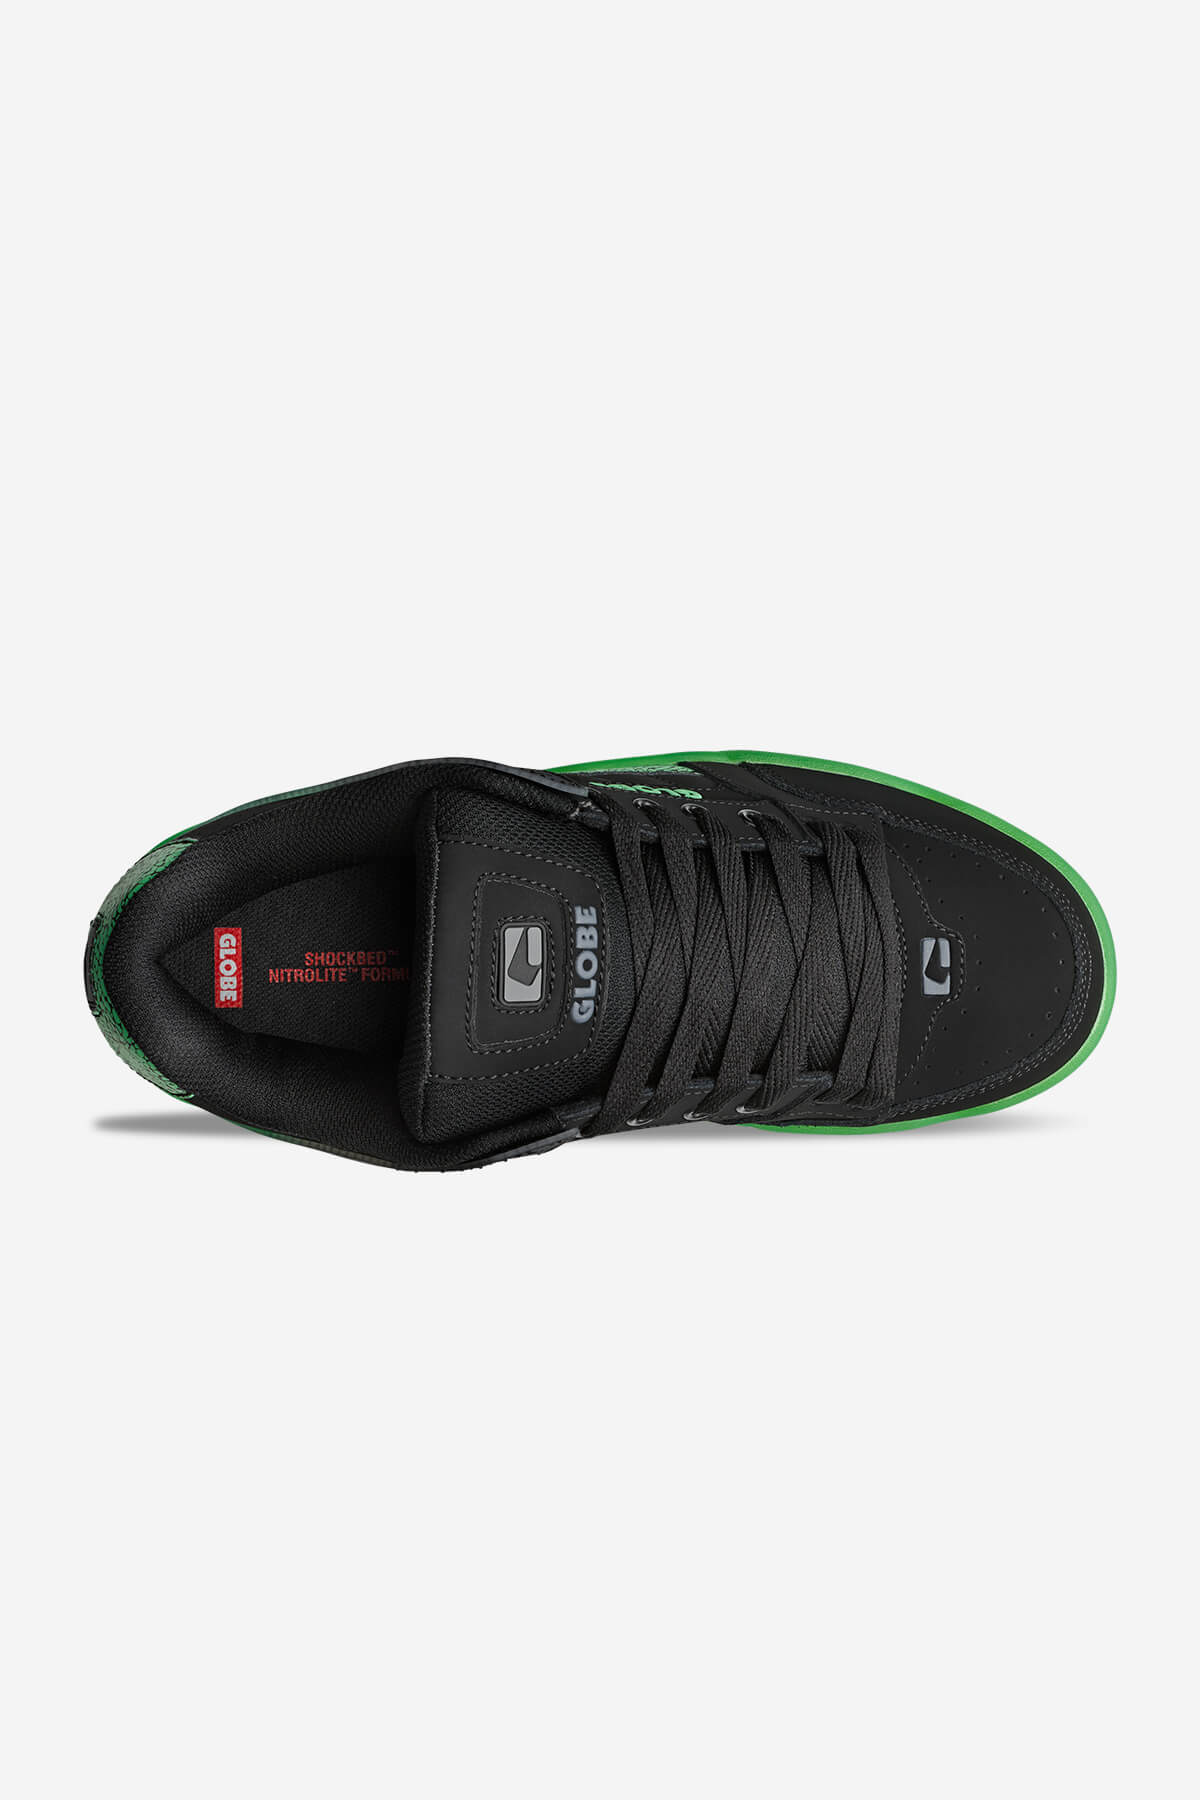 Globe Low shoes Tilt - Black/Green Stipple in Black/Green Stipple